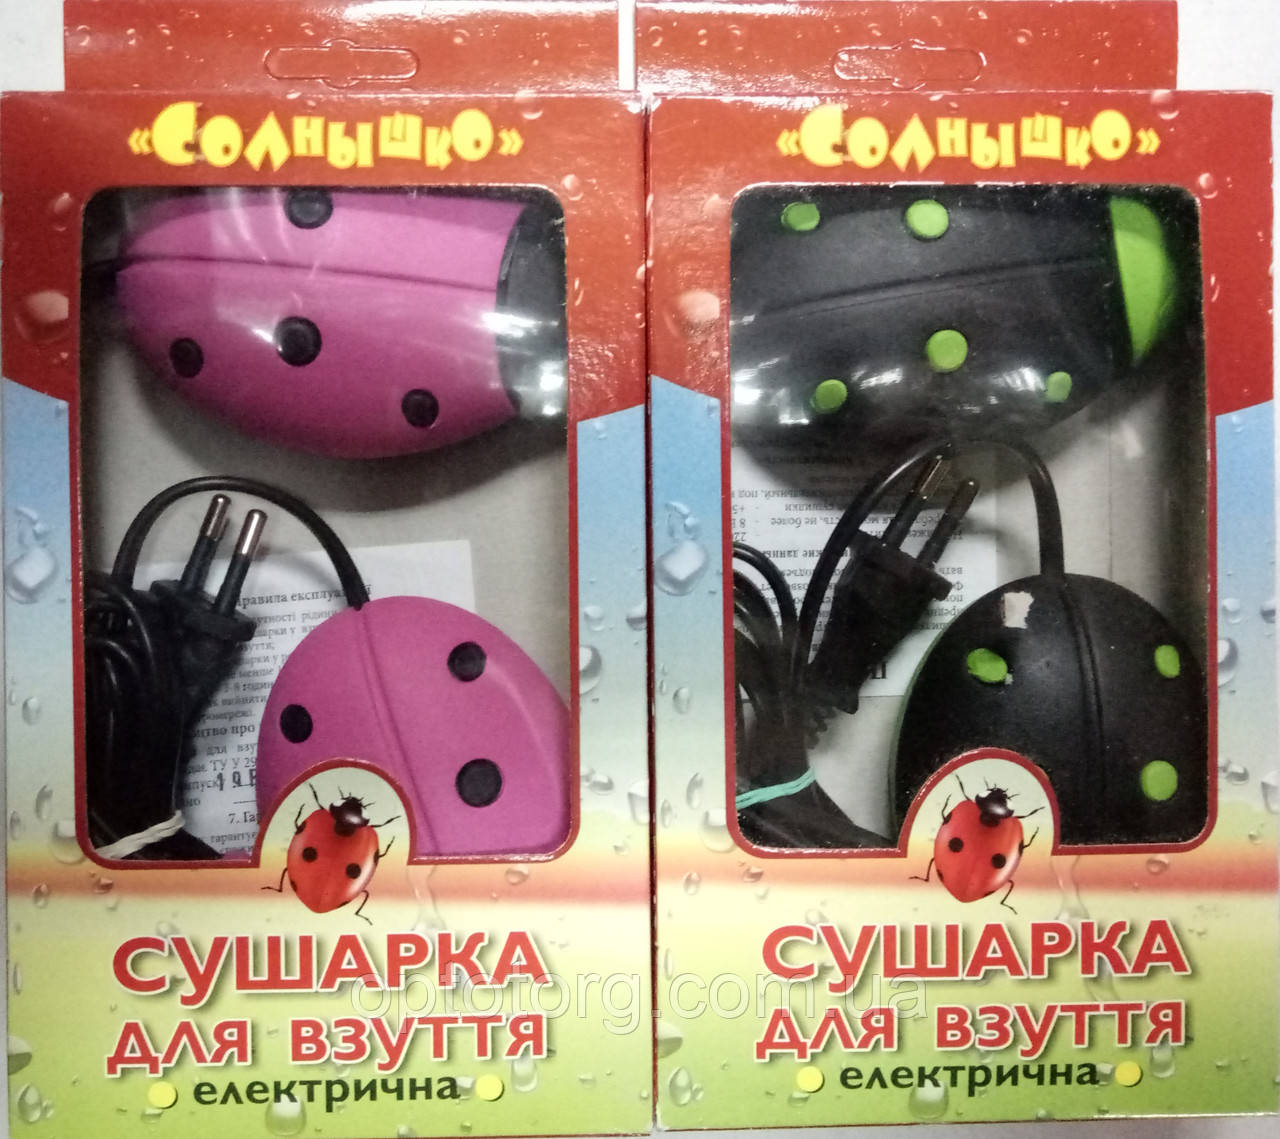 Сушарка Рожева із зеленим для взуття Сонечко електрична Україна